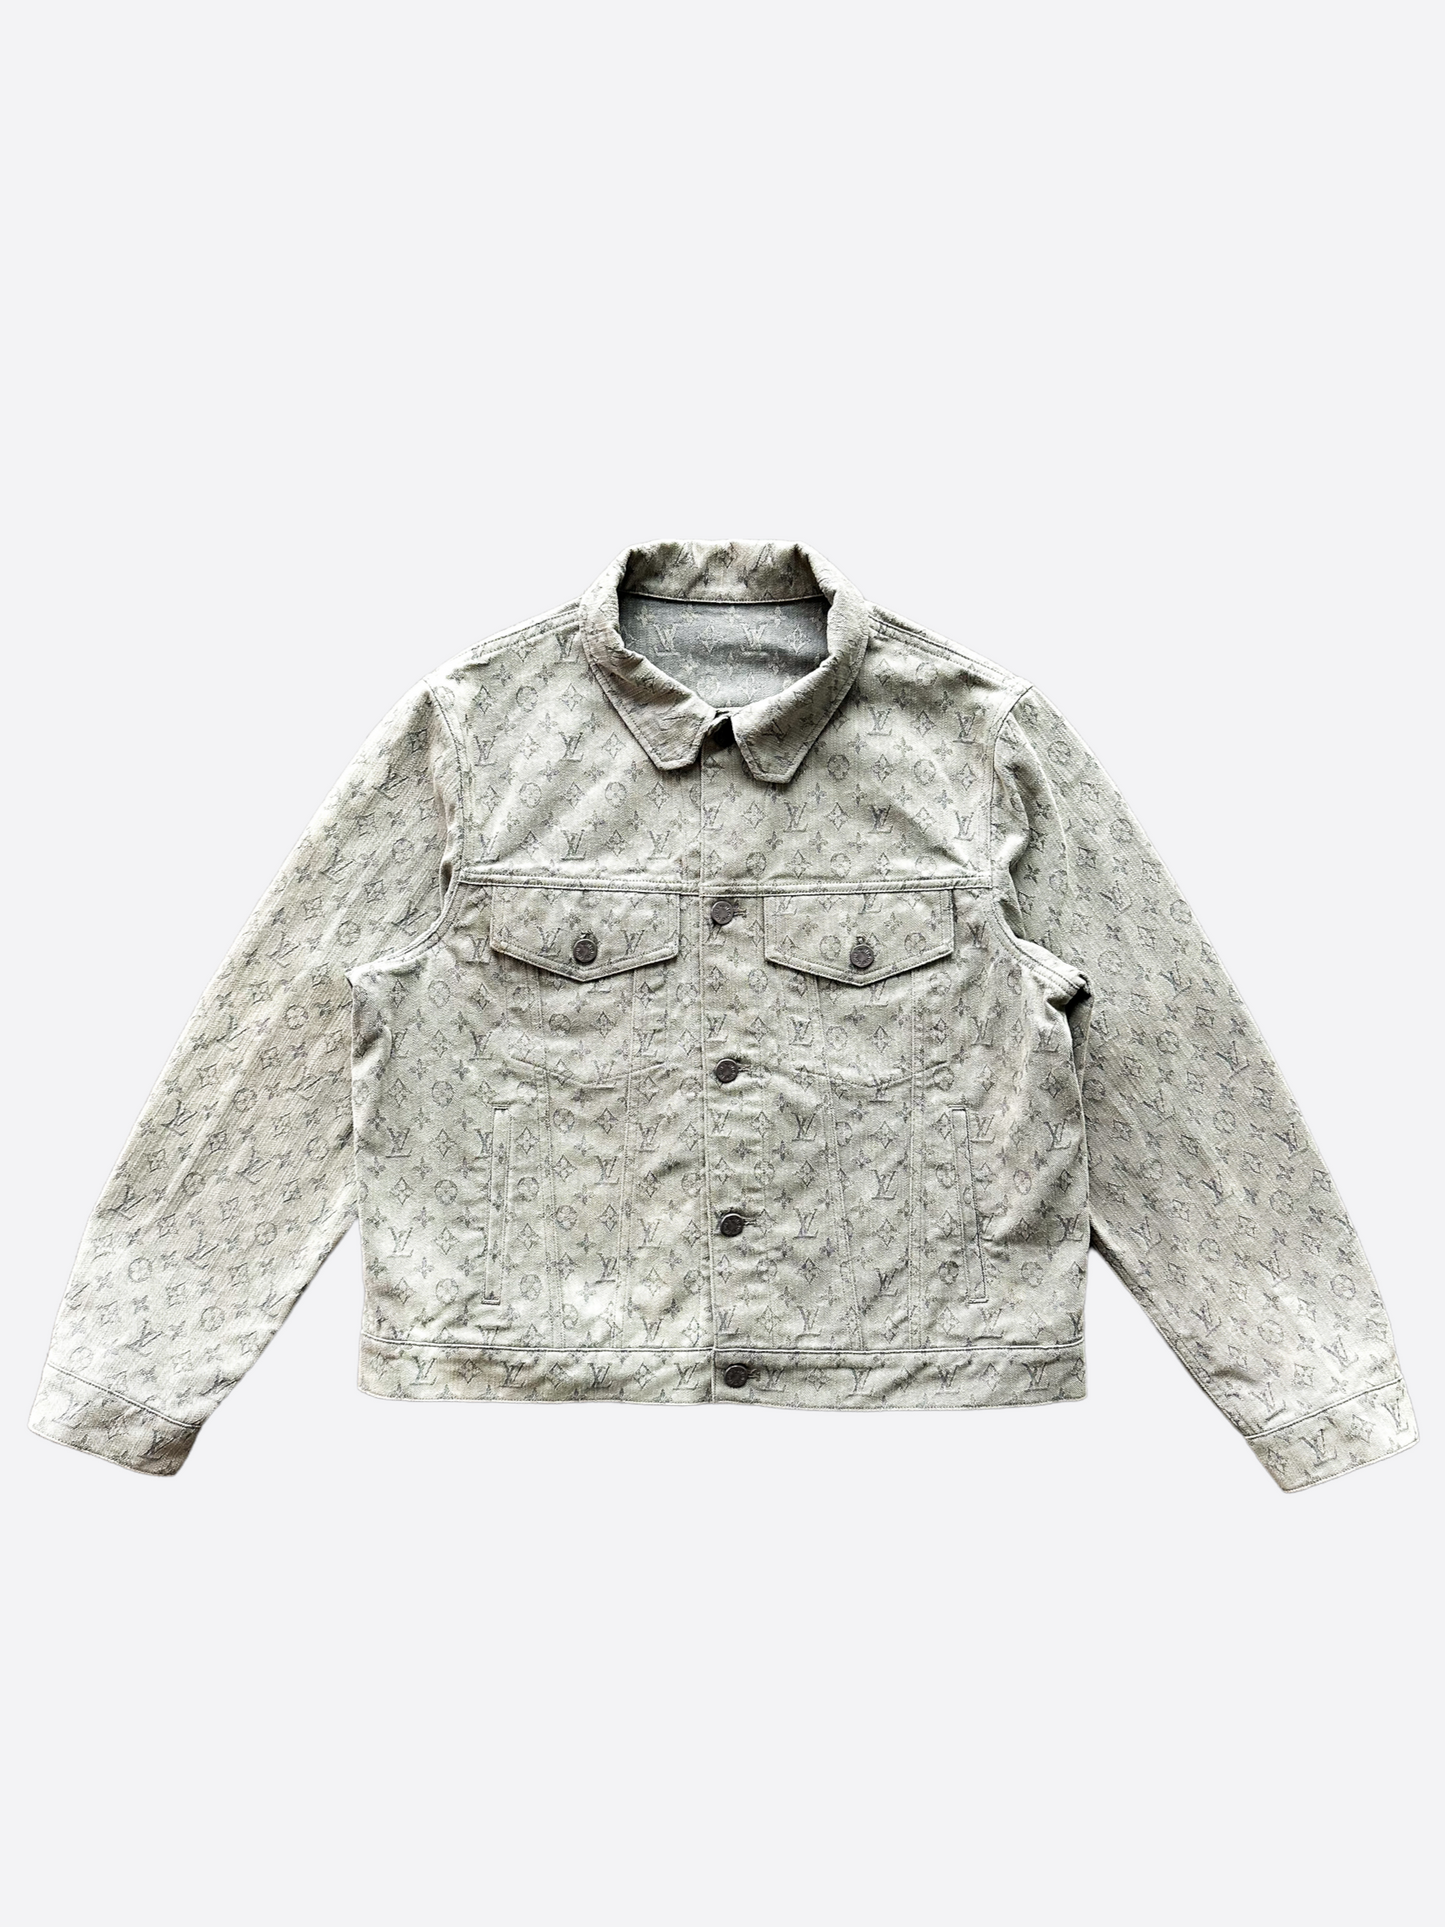 Louis Vuitton Monogram Tailored Denim Jacket, Grey, 46